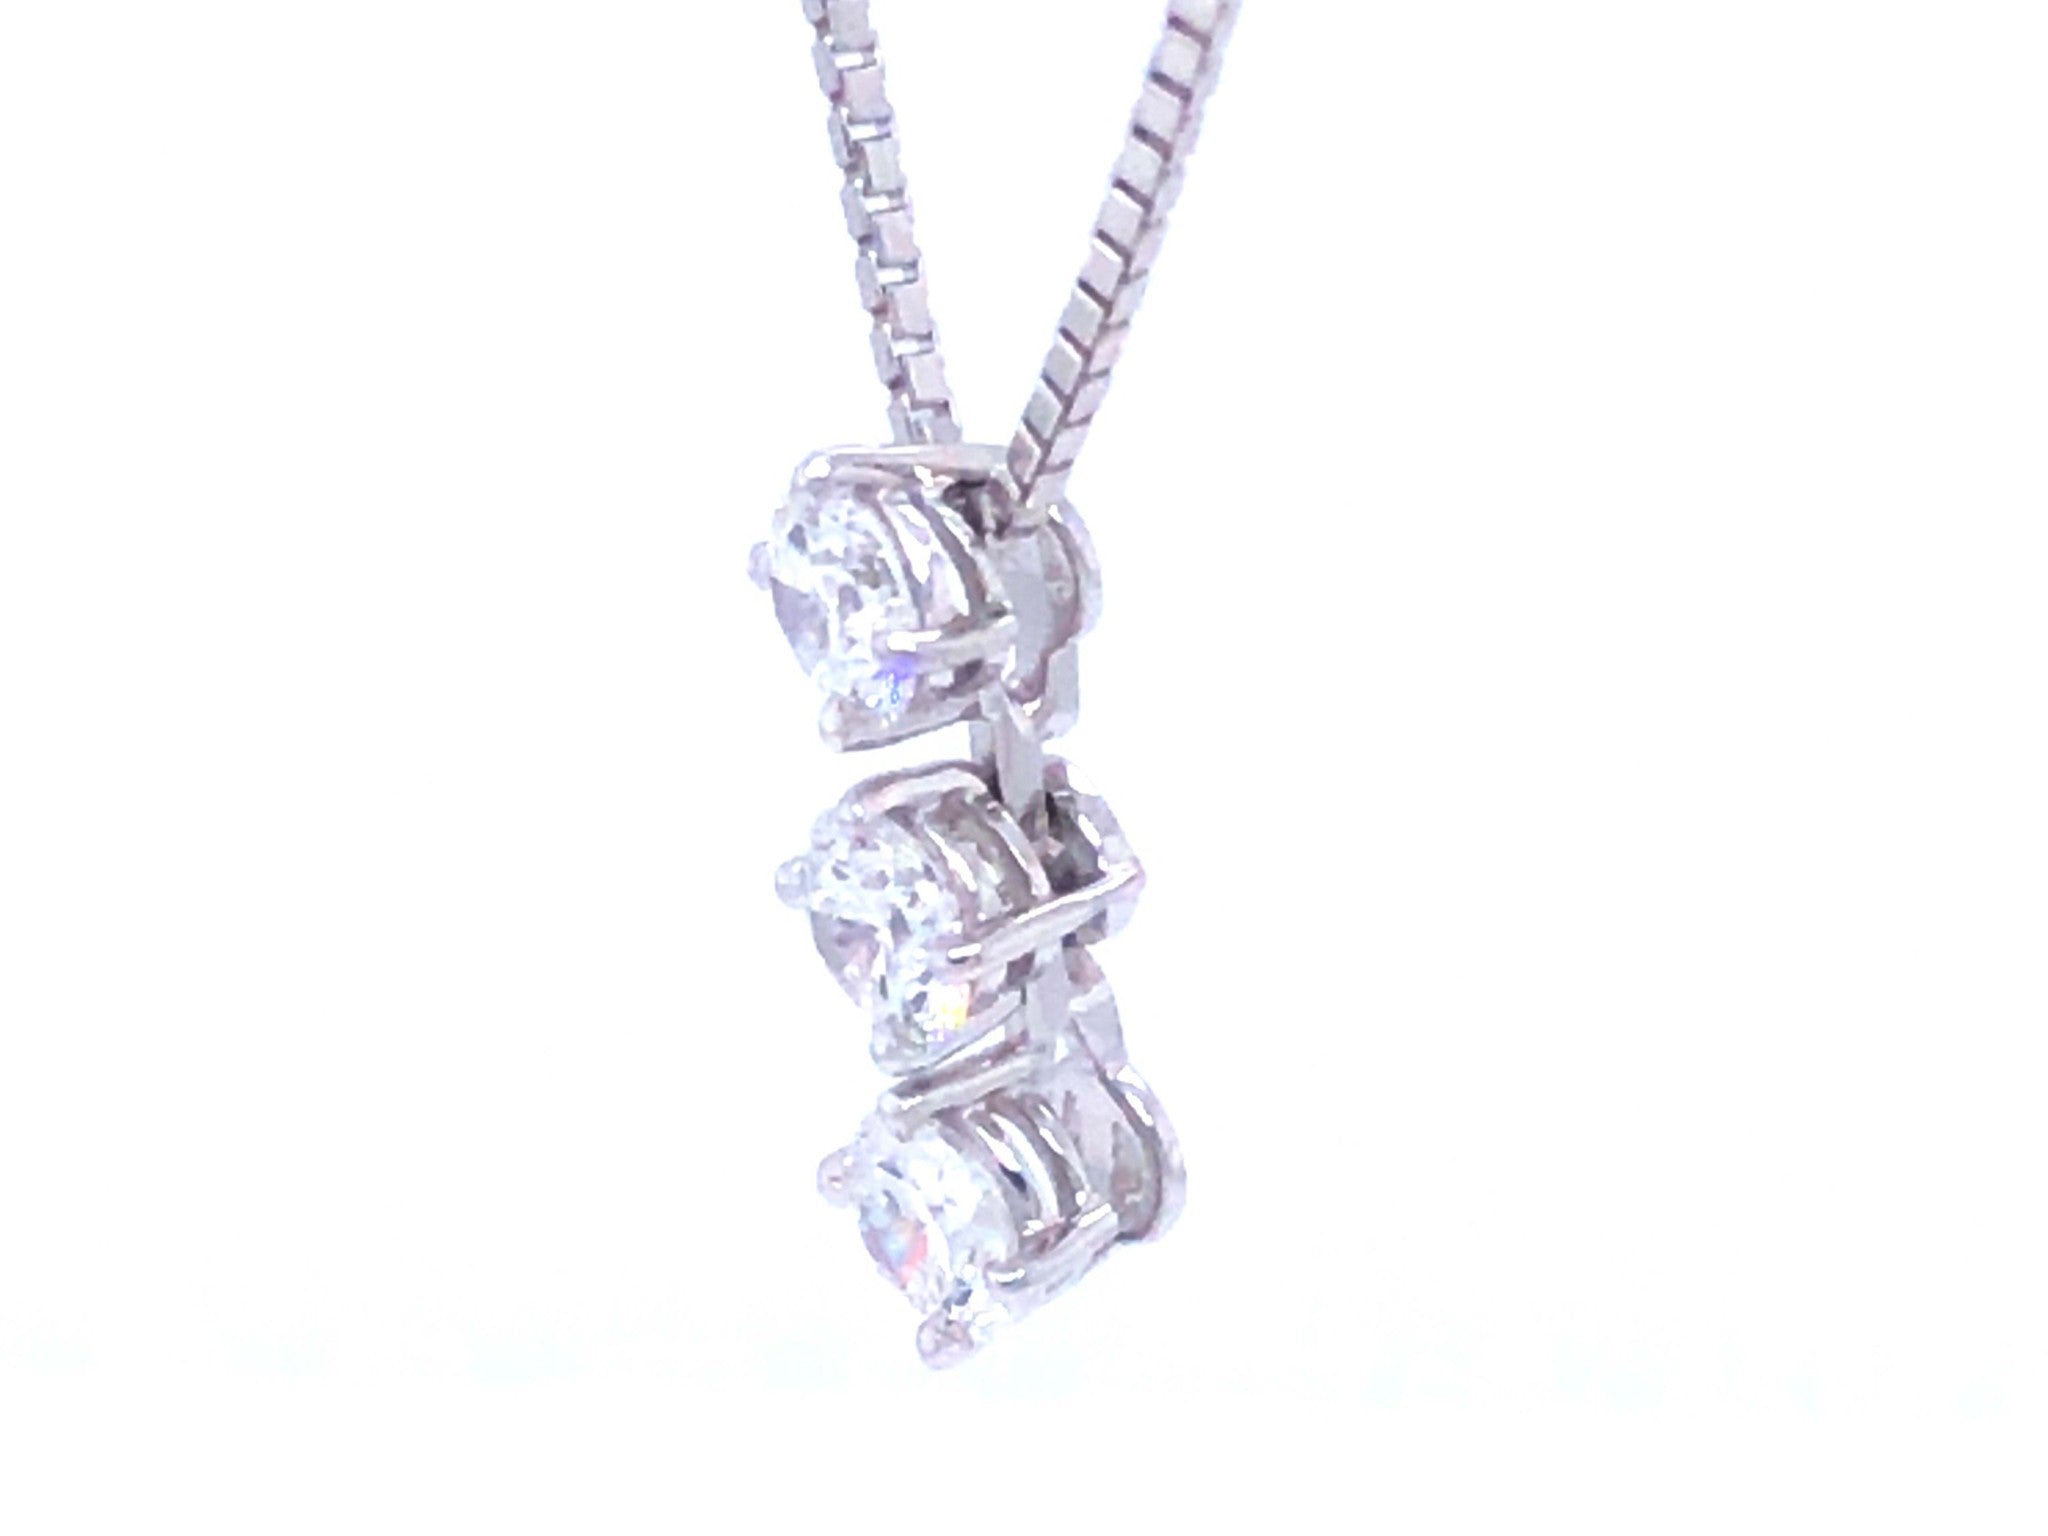 Trilogy 3 Diamond Drop Necklace in Platinum